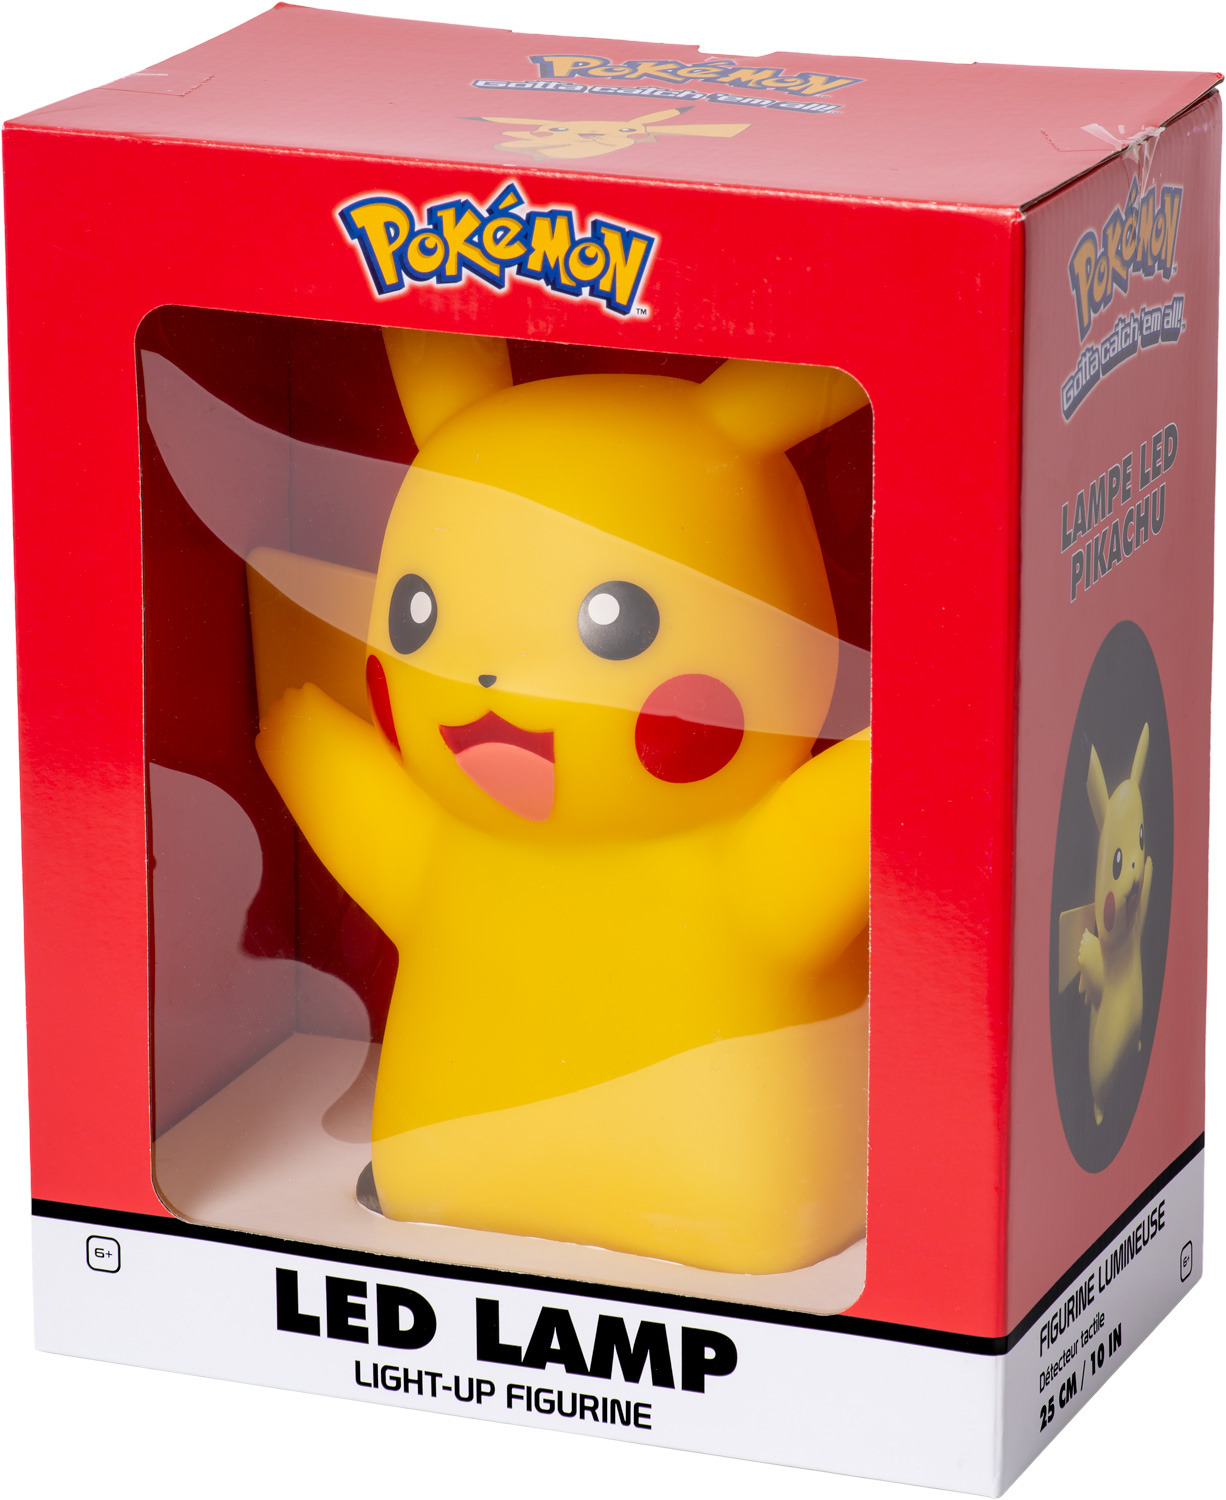 Pokémon - LED Lampe - 25 Pikachu cm